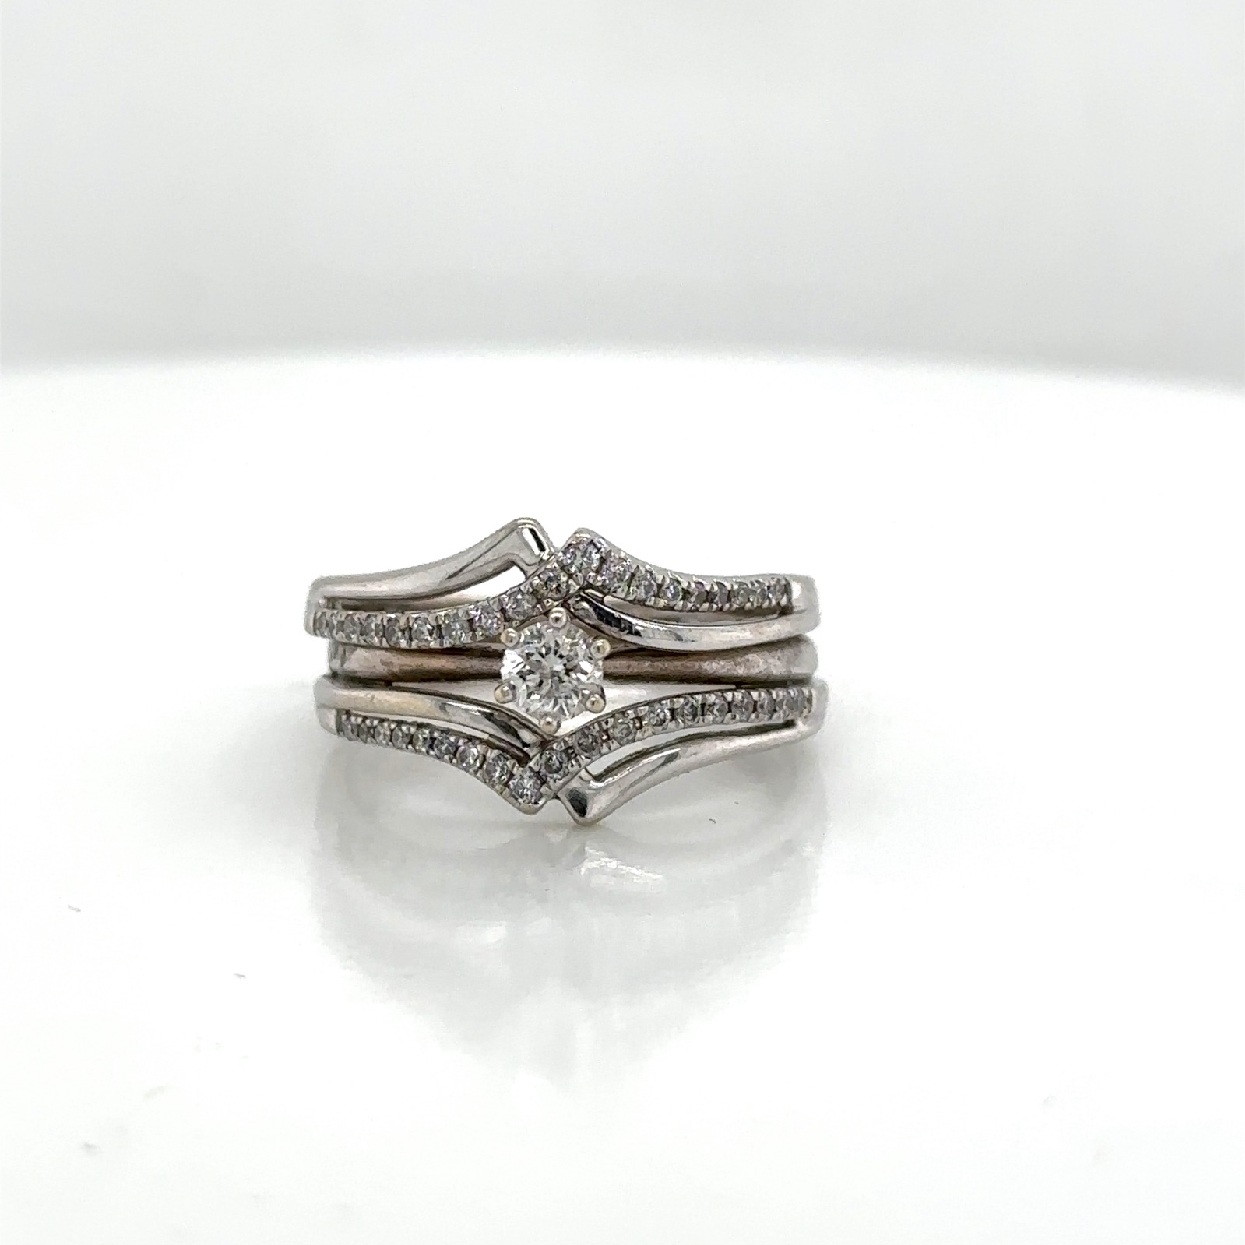 14K White Gold Engagement Ring

Size 7.75